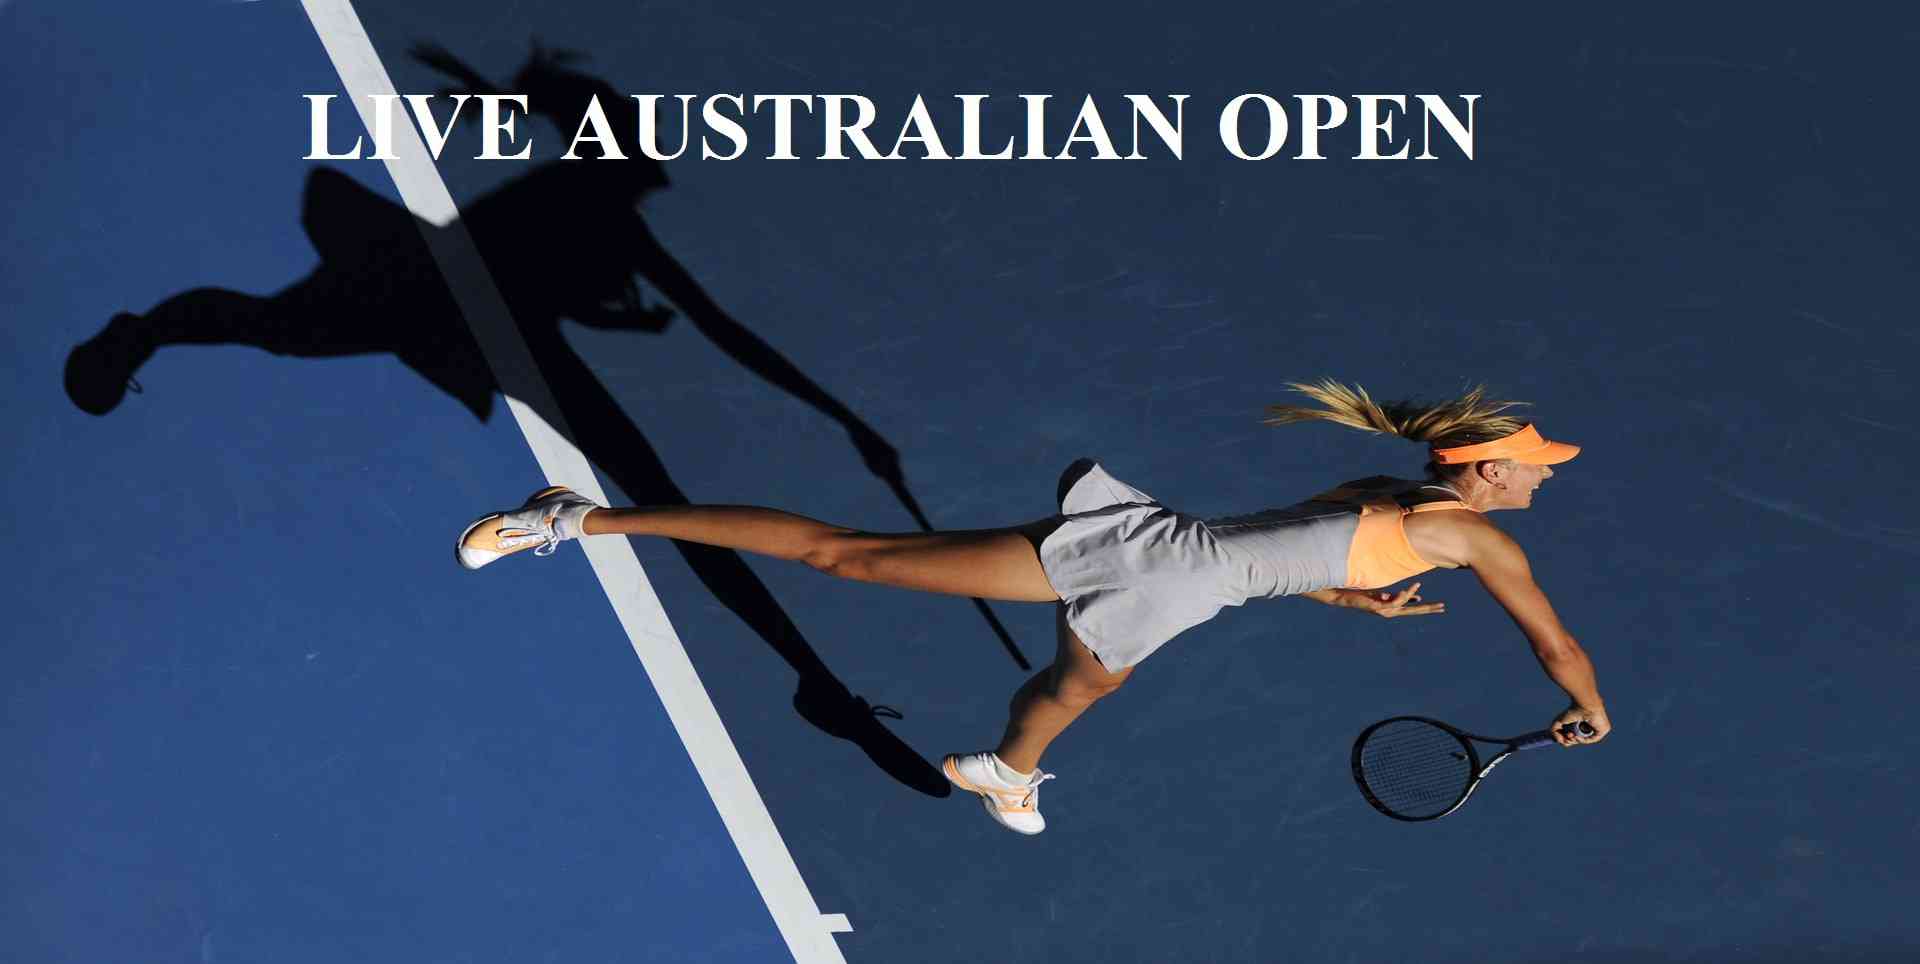 Australian Open 2017 Semifinals live